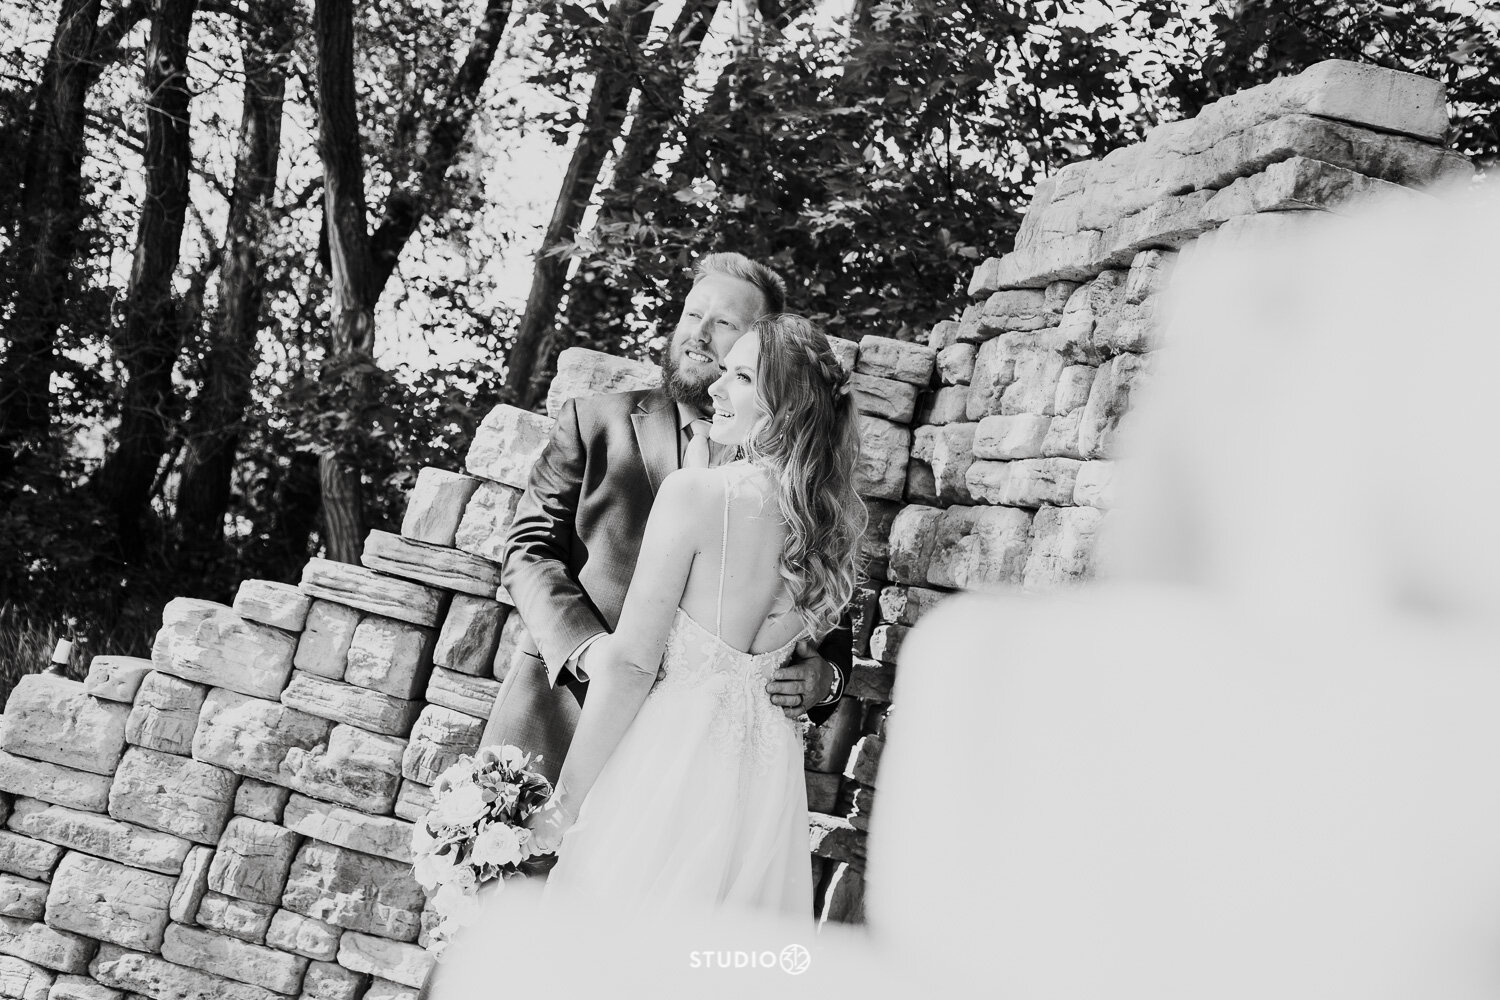 Studio-312-Photographer-Wedding-Evergreen-Village-Riley-Kaitlyn-Winnipeg-Wedding-73.jpg